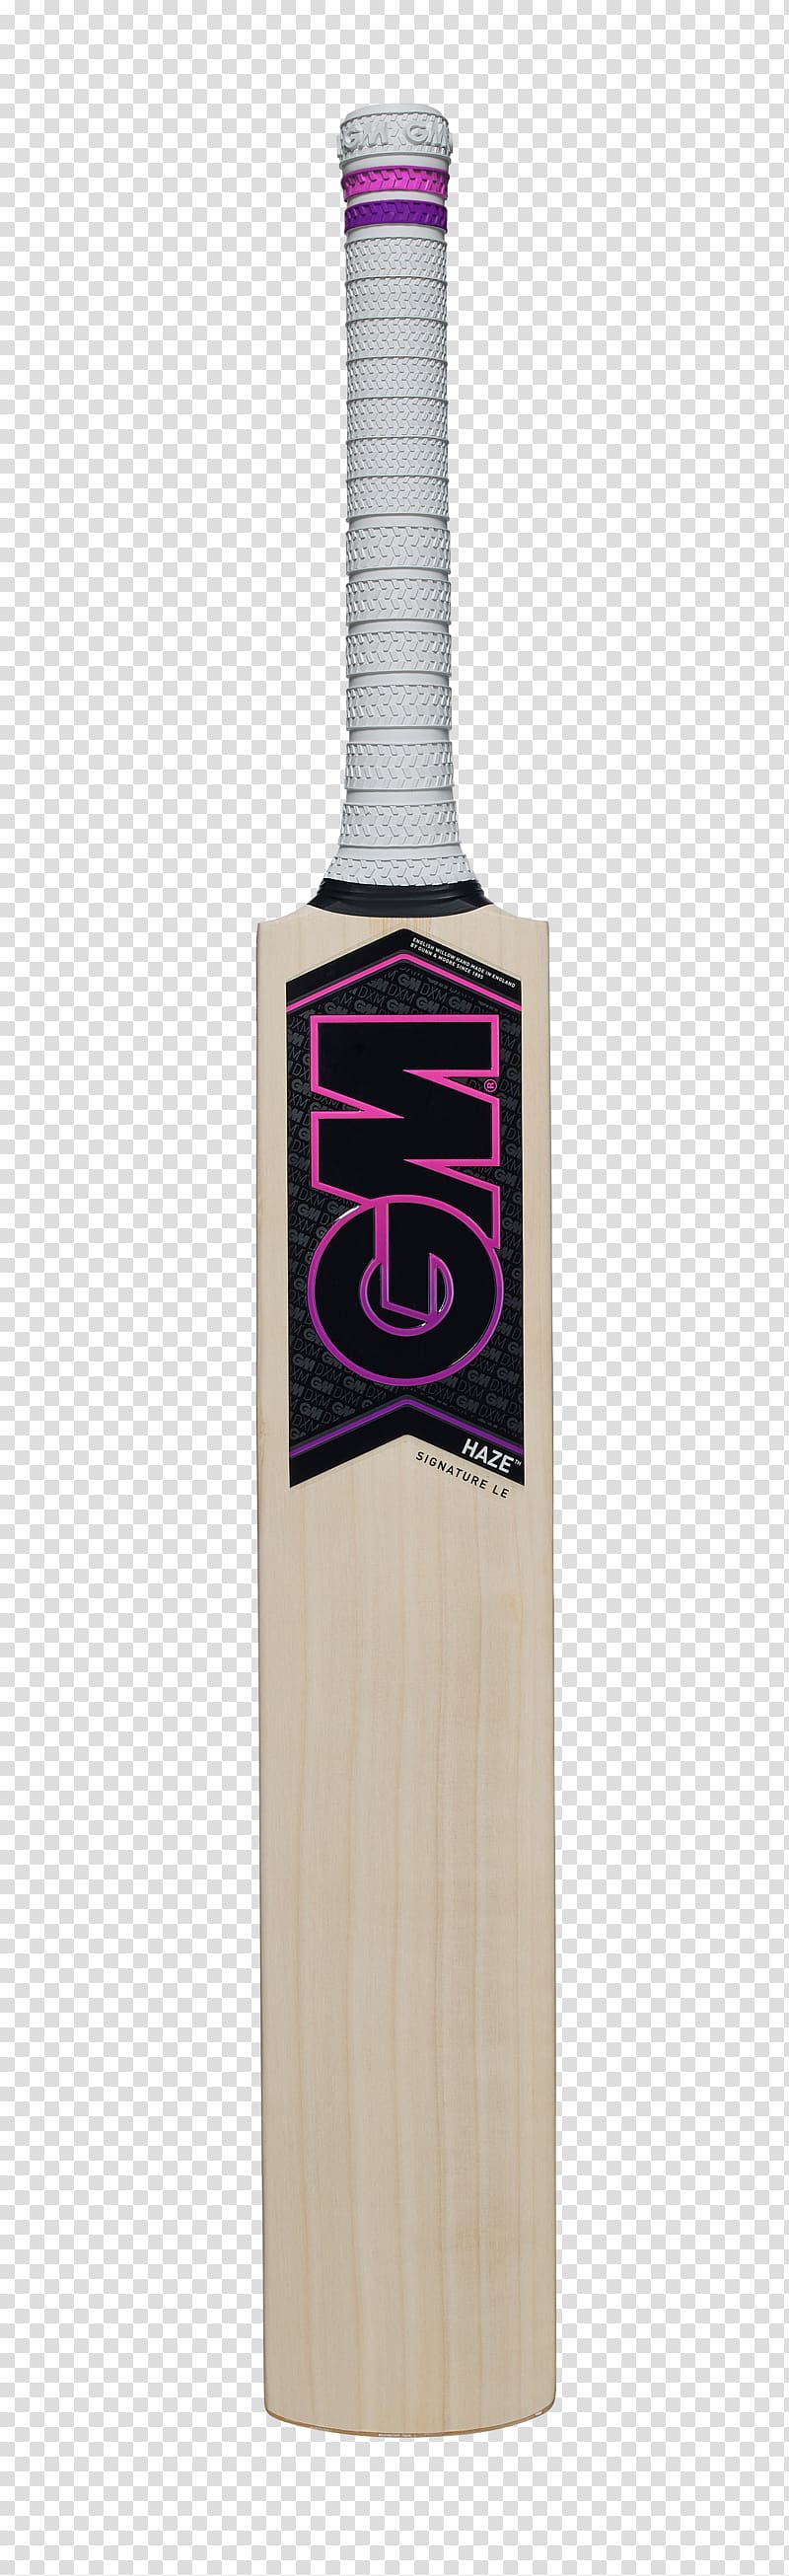 Cricket Bats Batting Gunn & Moore England, cricket transparent background PNG clipart